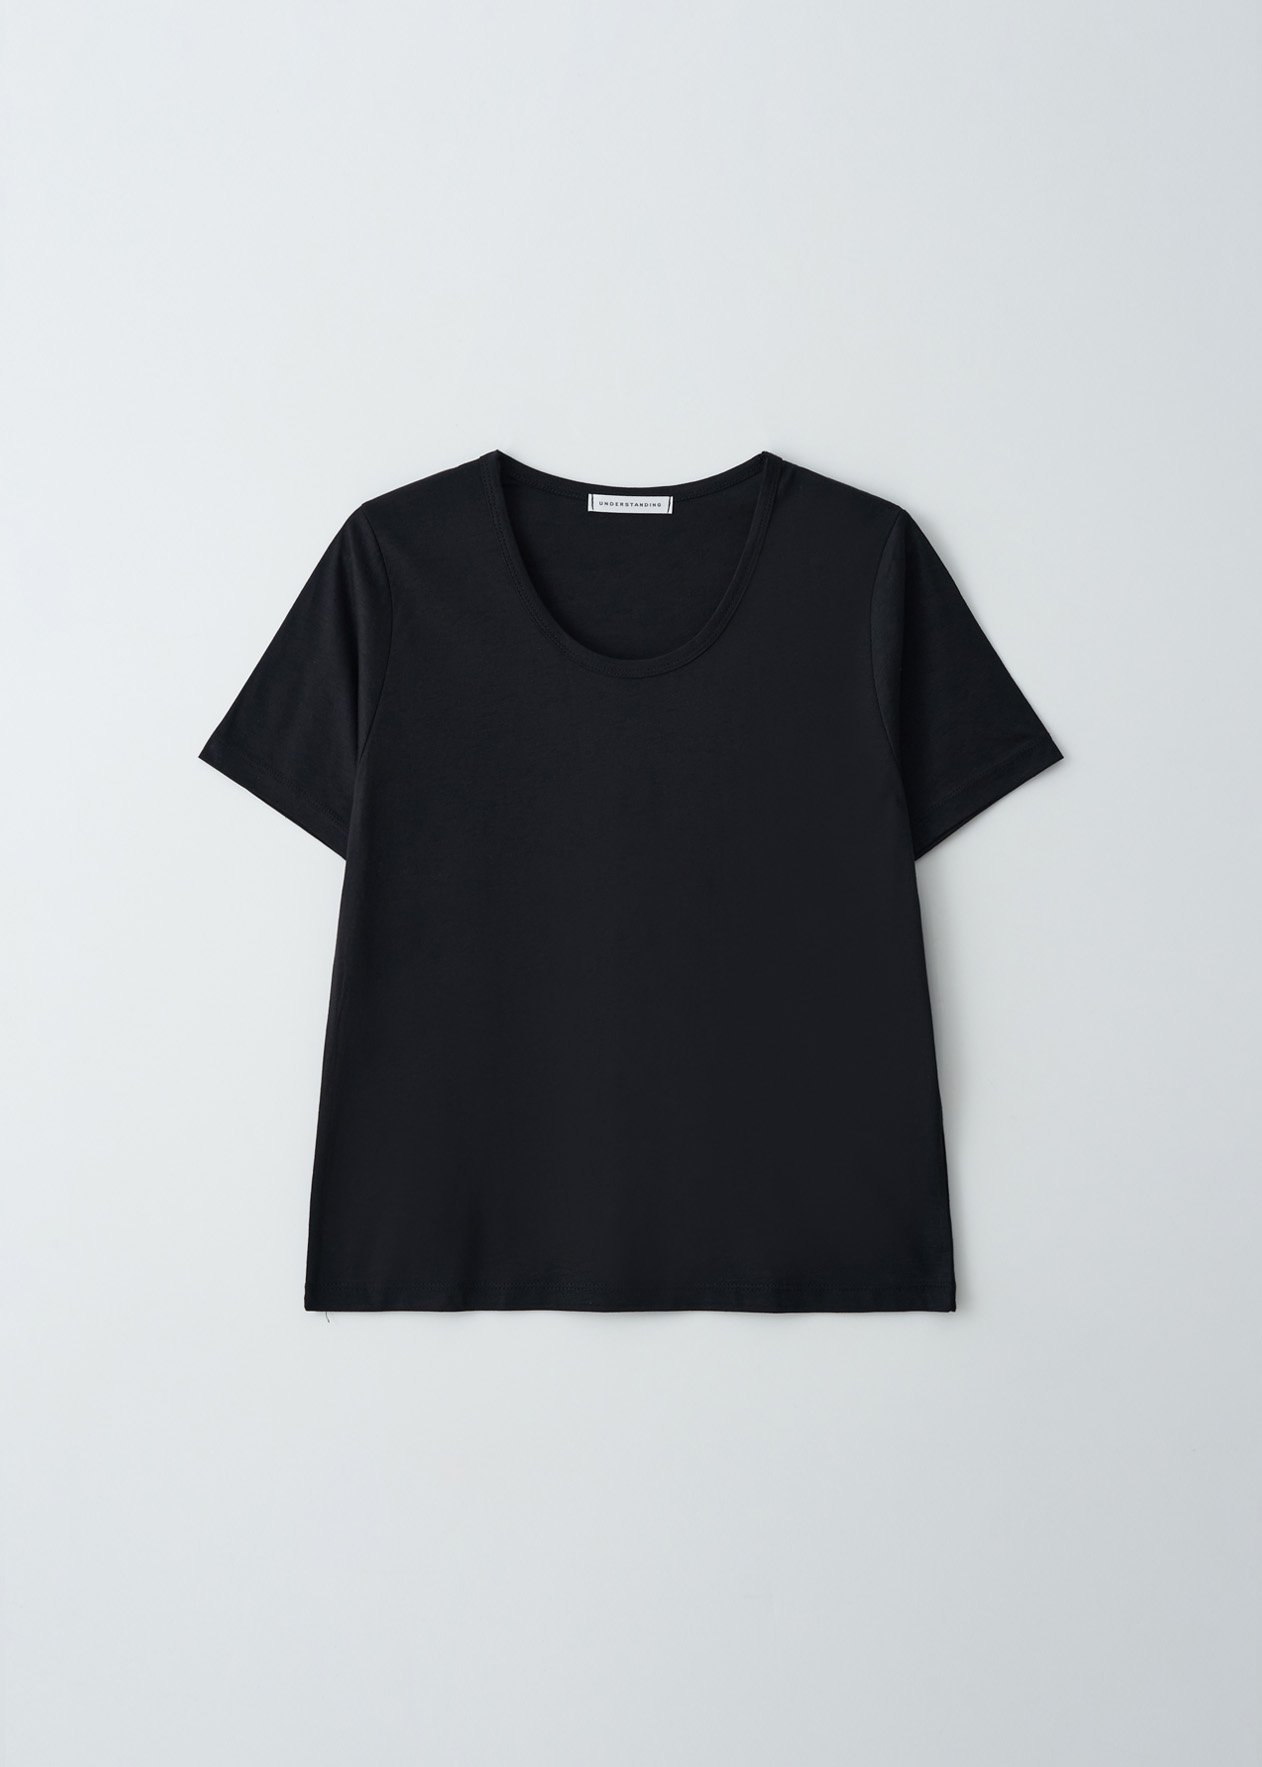 U-neck short-sleeved t-shirt